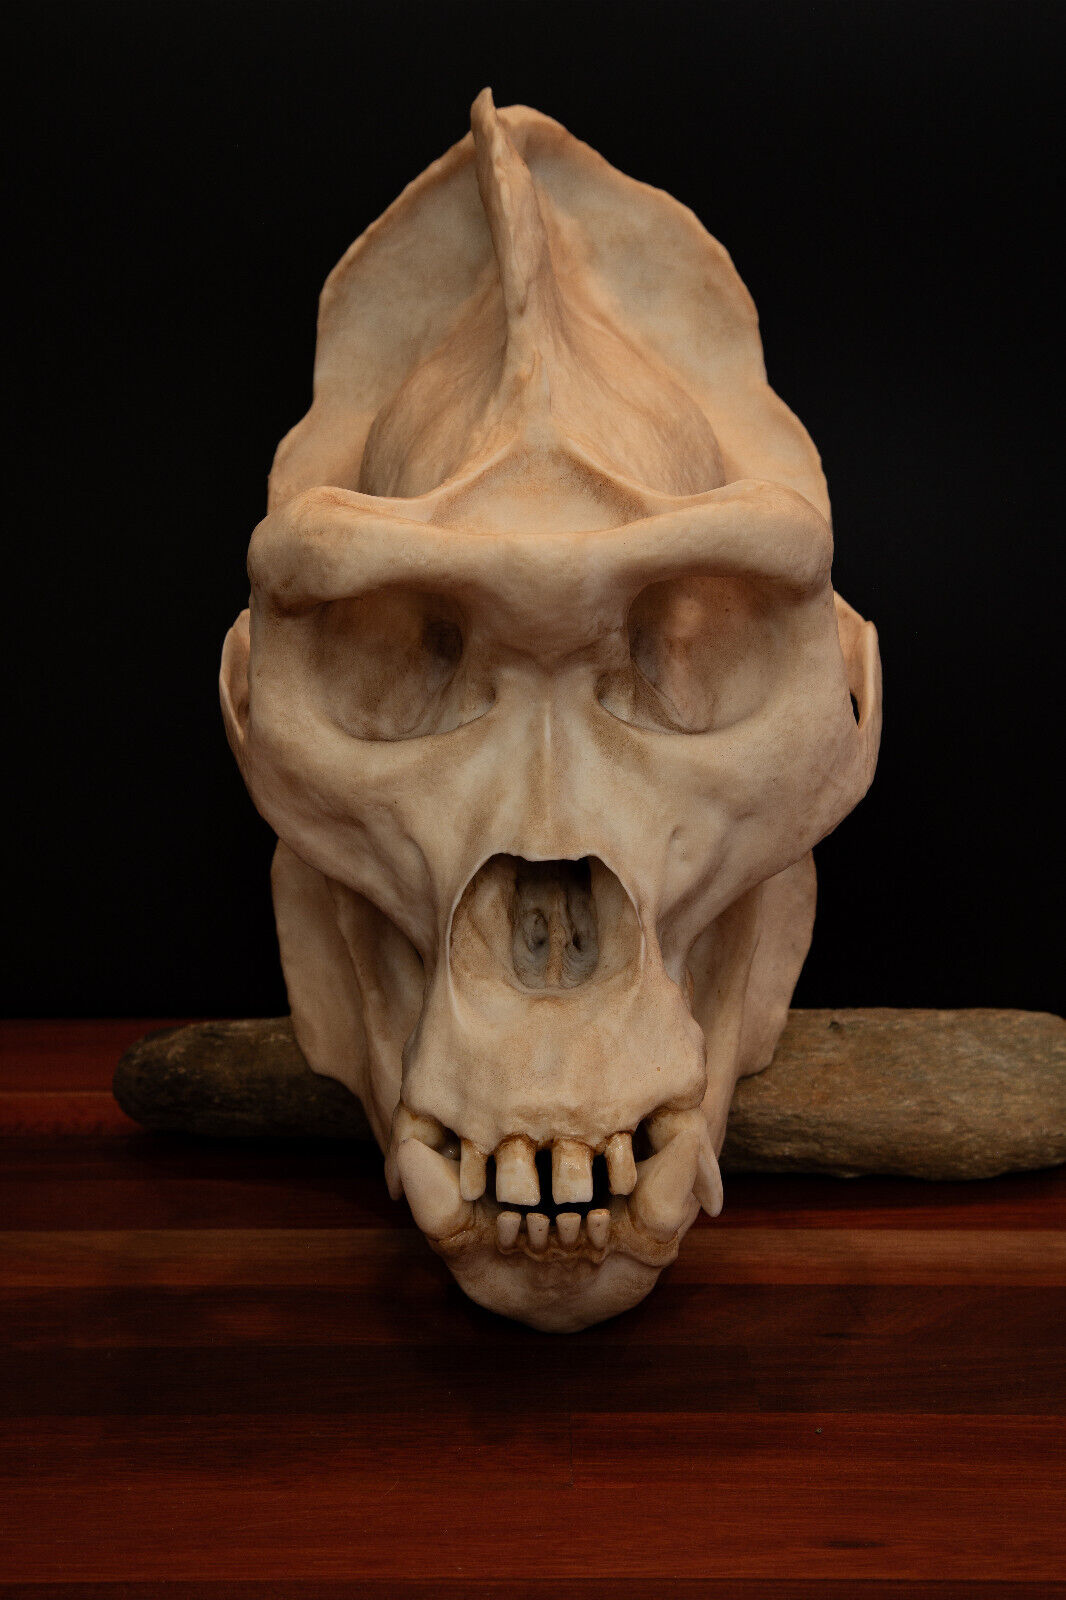 Male Gorilla Skull, large Replica Skull (Full Sized) - FREE delivery world wide.